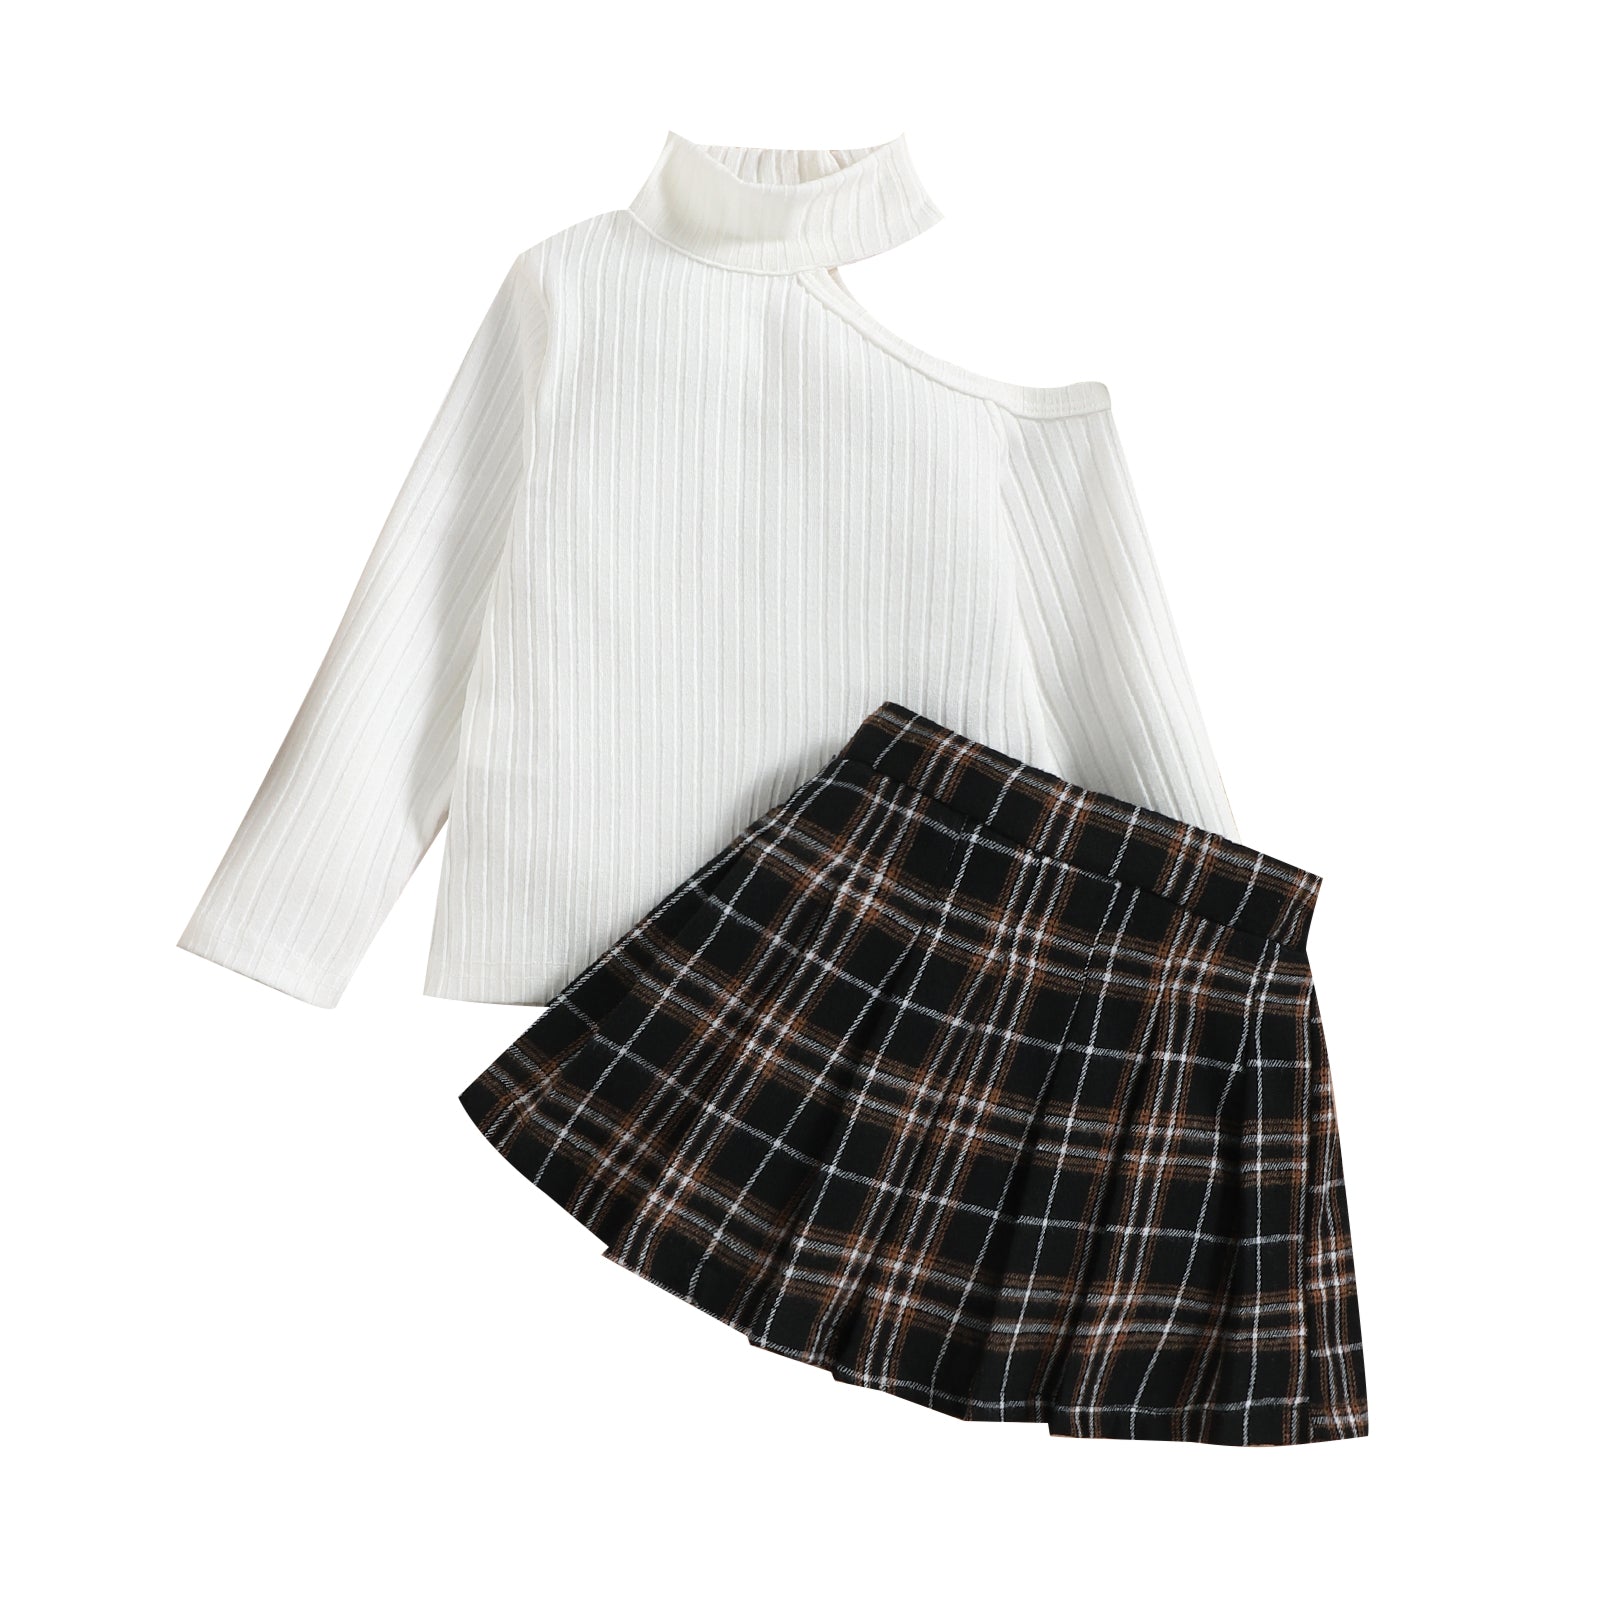 Baby White Pit Stripe Top + Plaid Skirt.